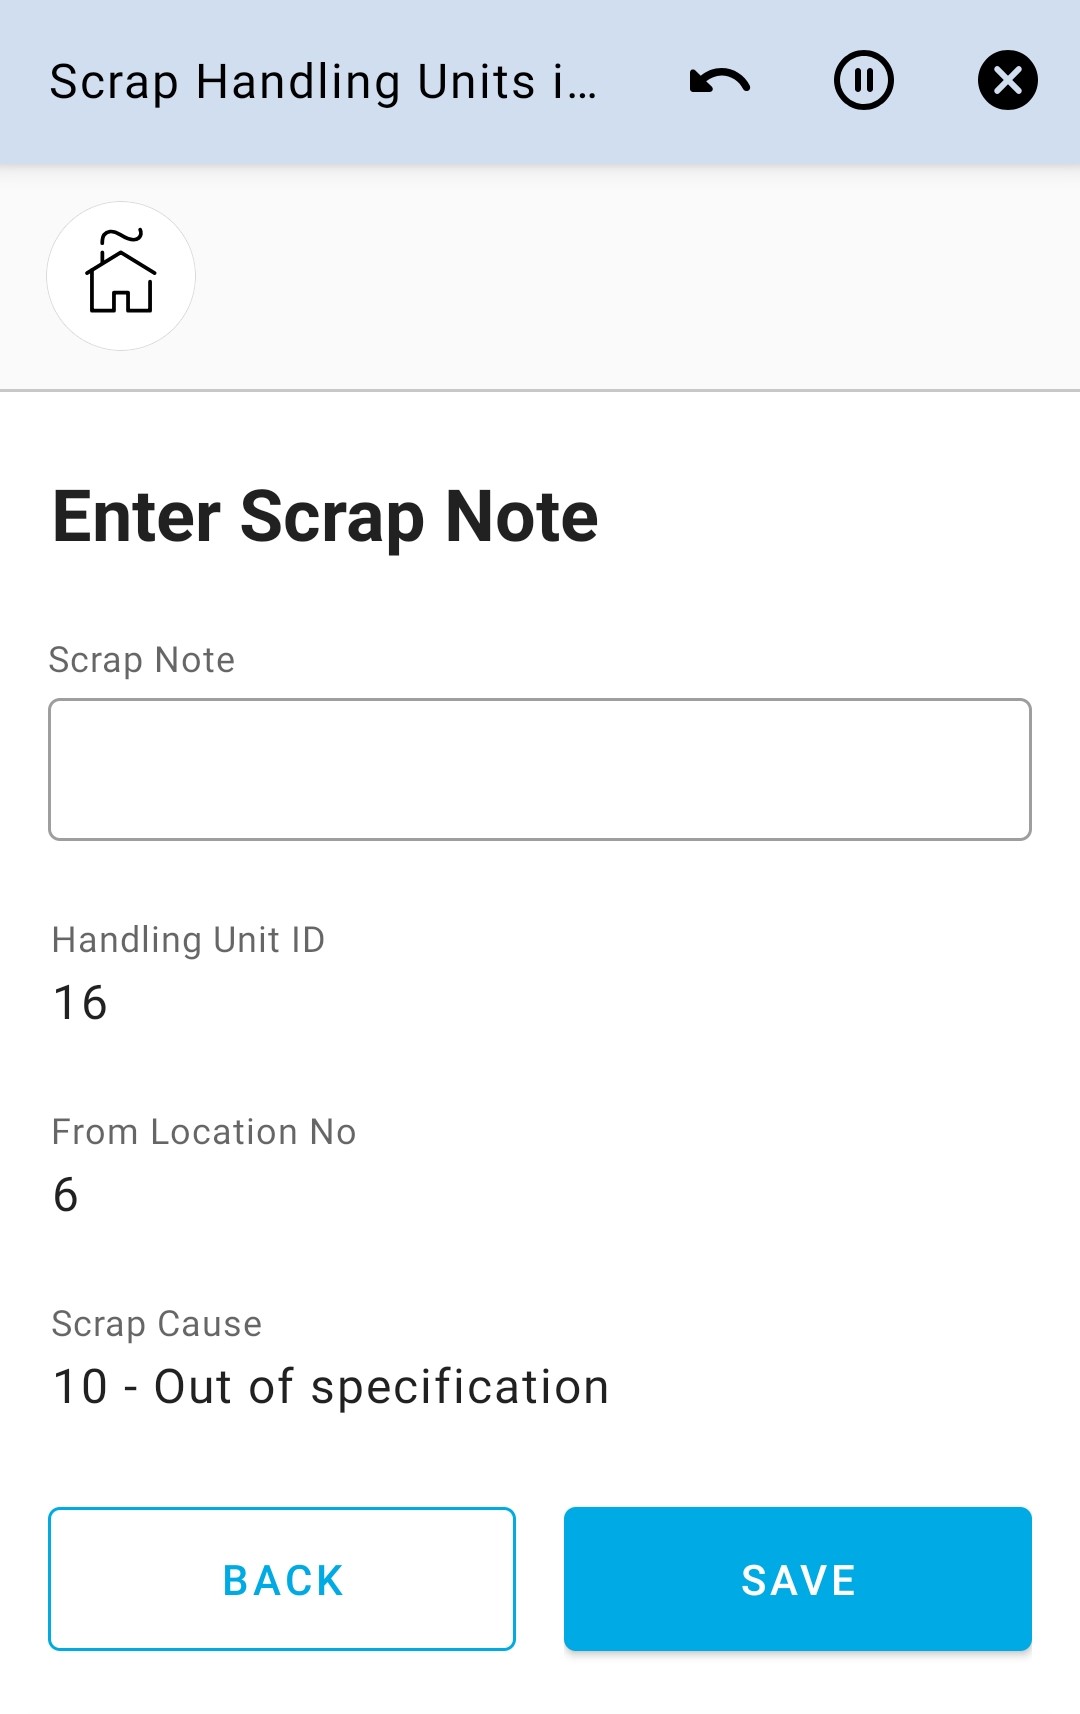 Enter Scrap Note